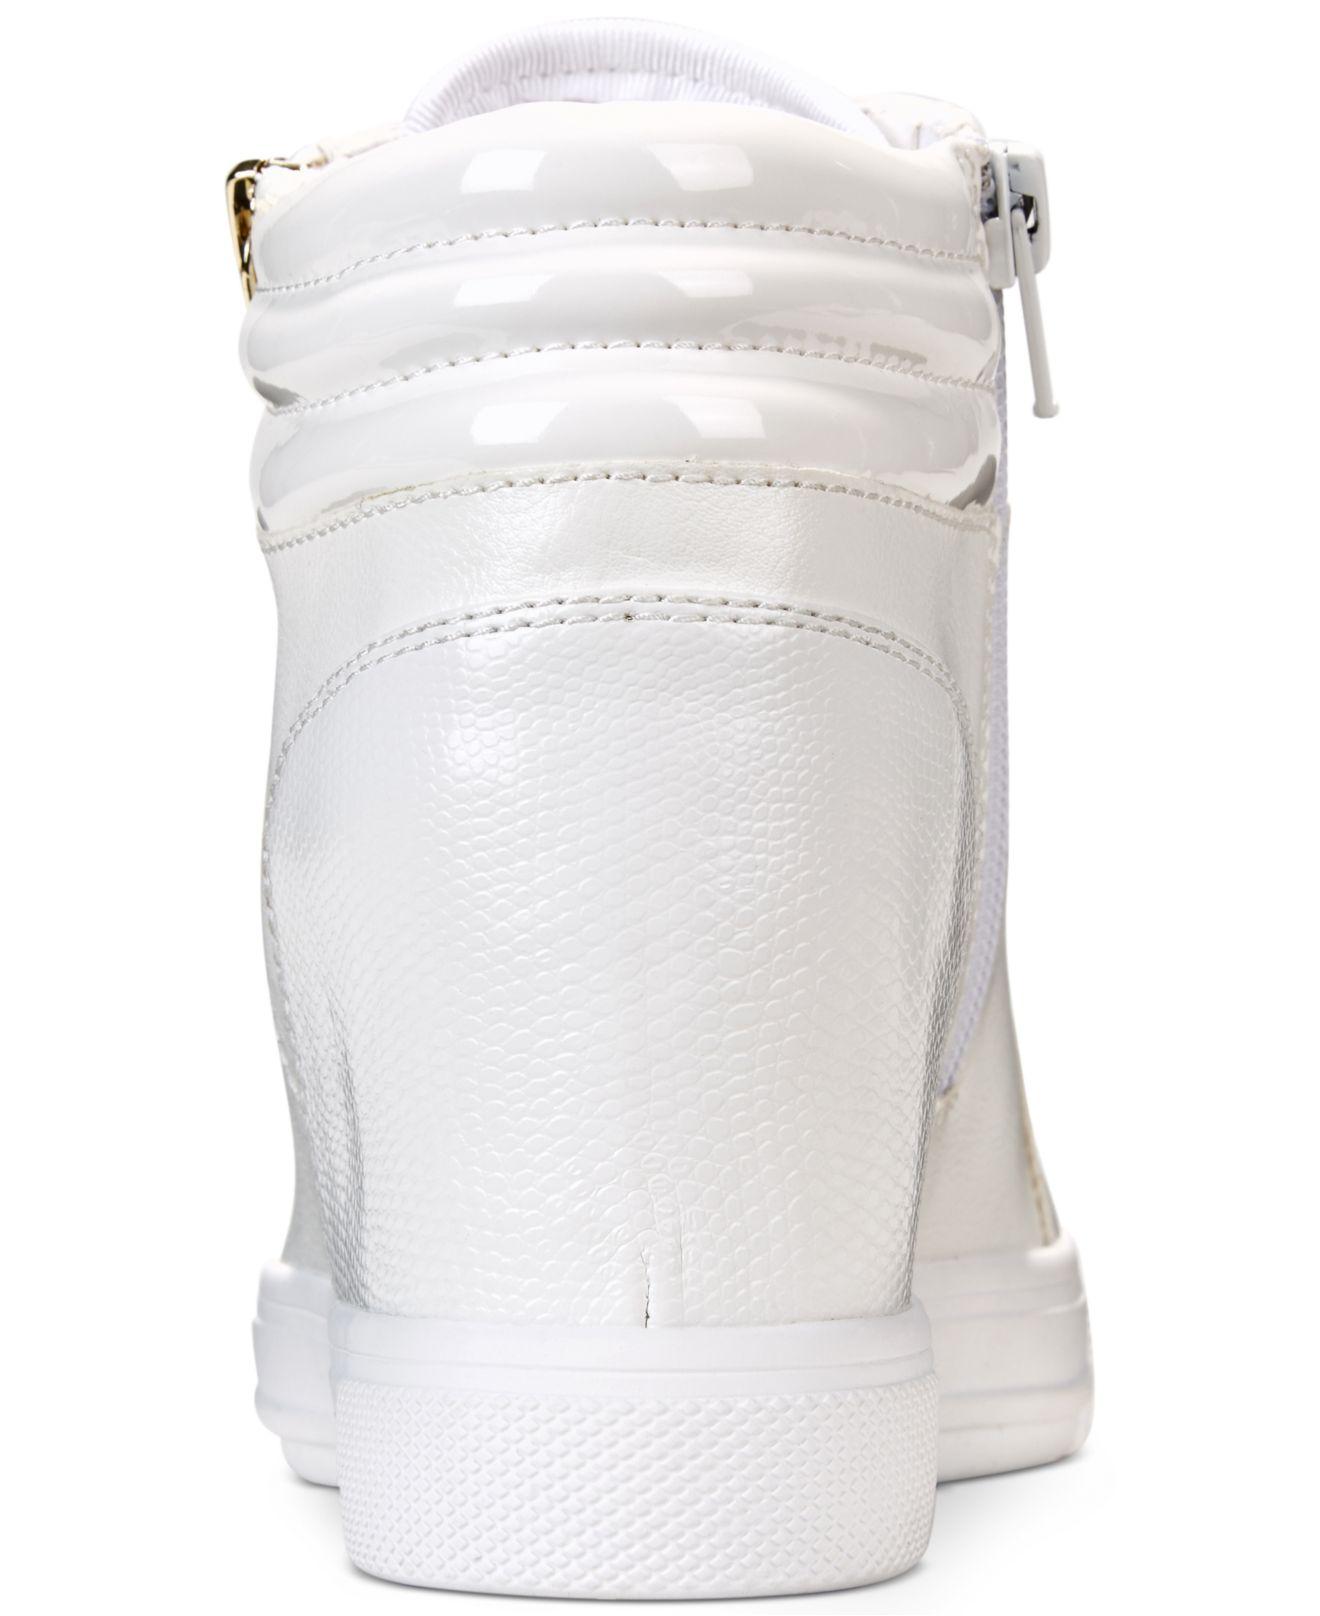 ALDO Kaia Wedge Sneakers in White | Lyst